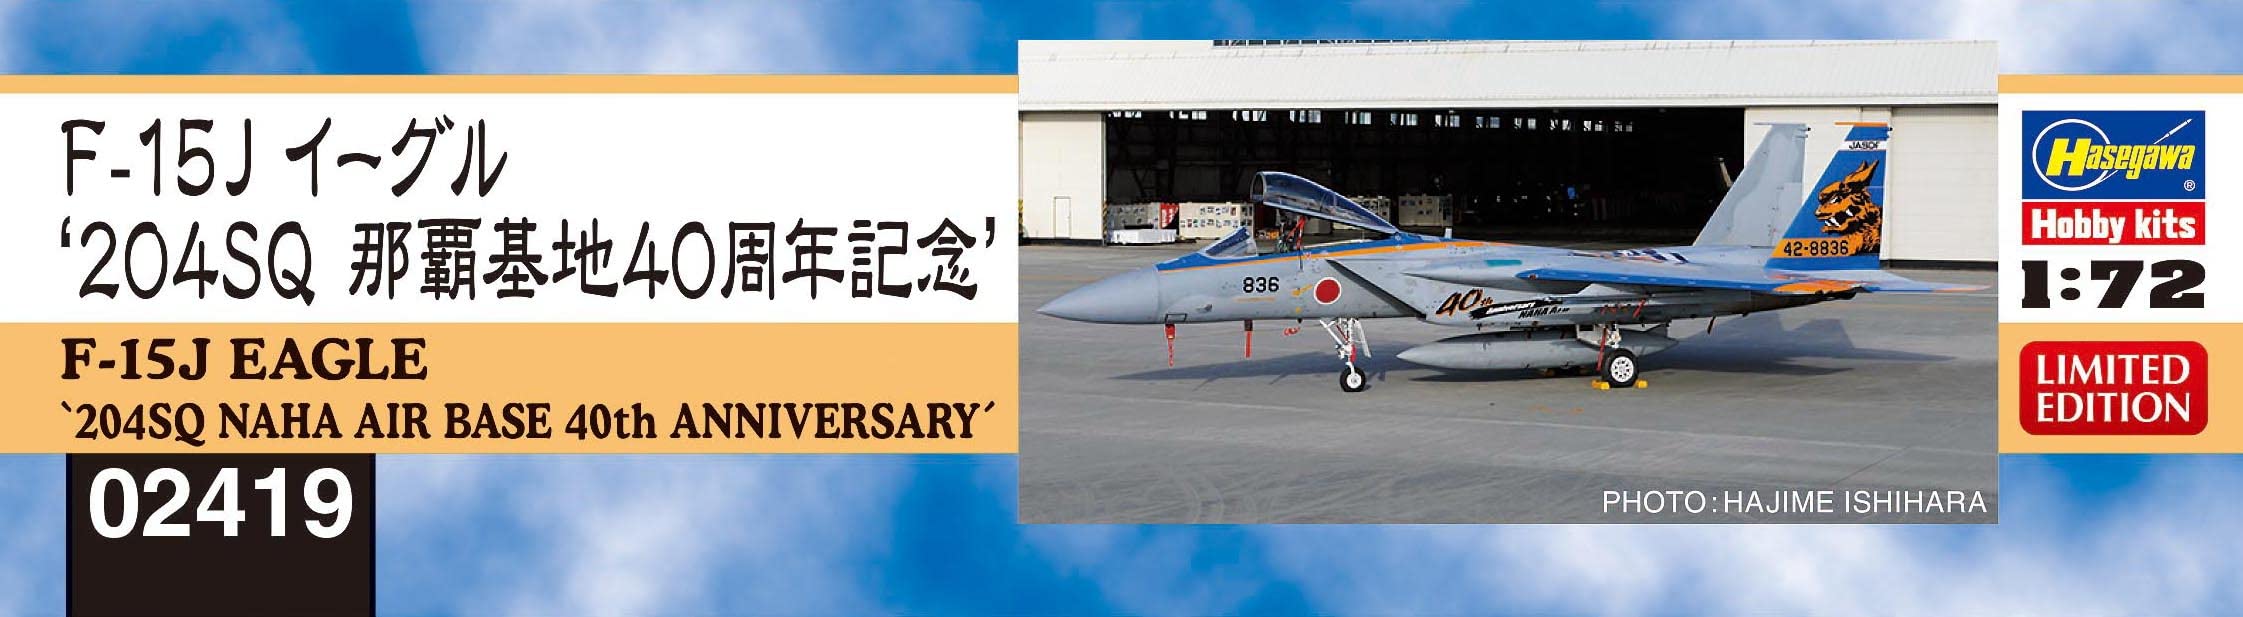 Hasegawa 1/72 F-15J EAGLE 204SQ NAHA AIR BASE 40th ANNIVERSARY kit 02419 NEW_2